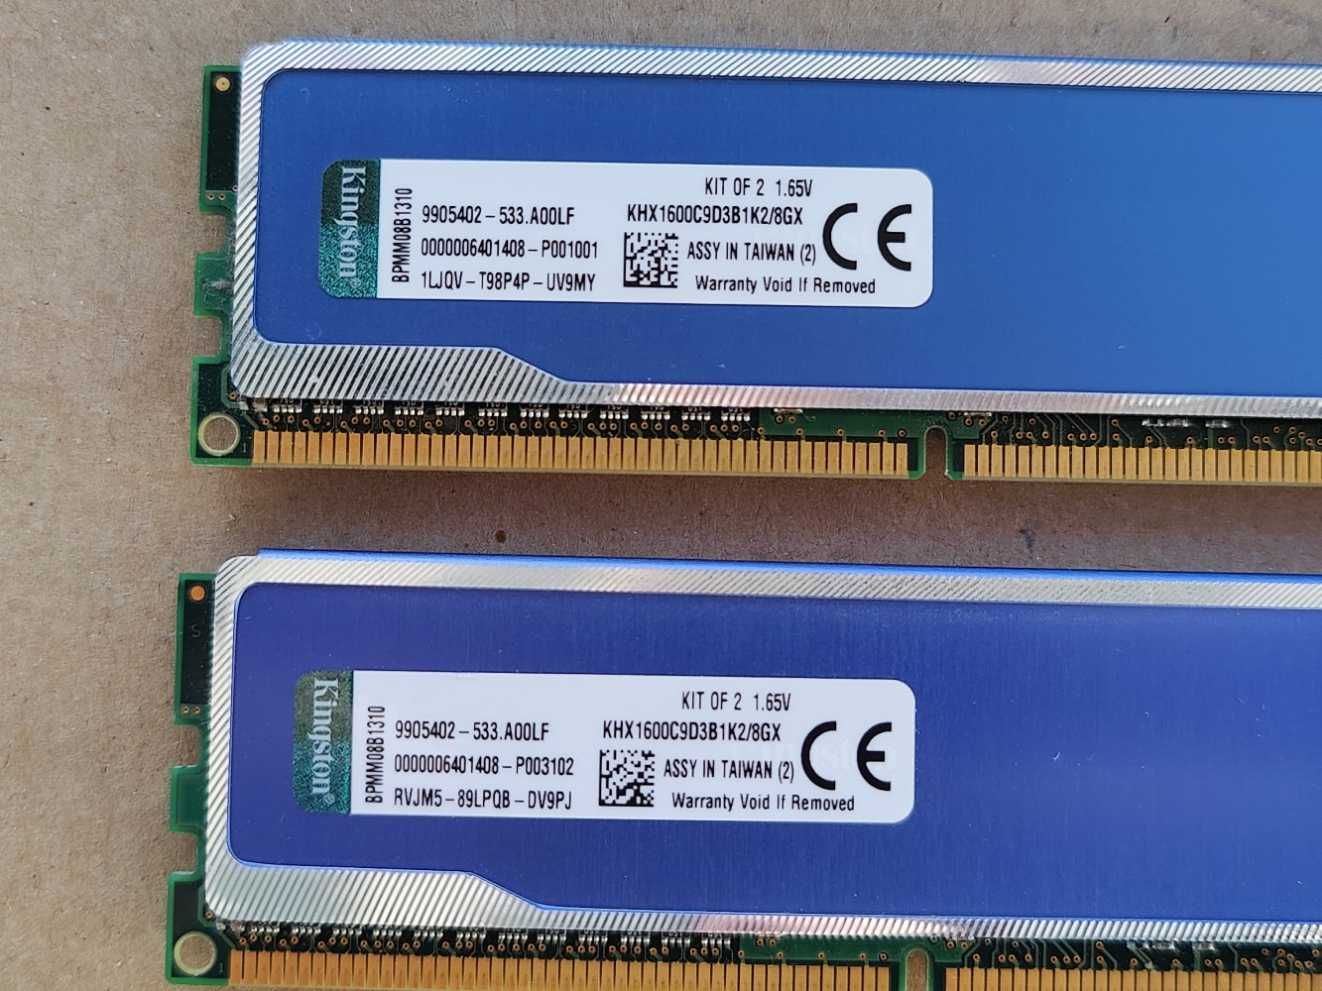 Memorie ram Kingston HyperX blu Kit 8GB (2x4GB), DDR3, 1600MHz, CL9